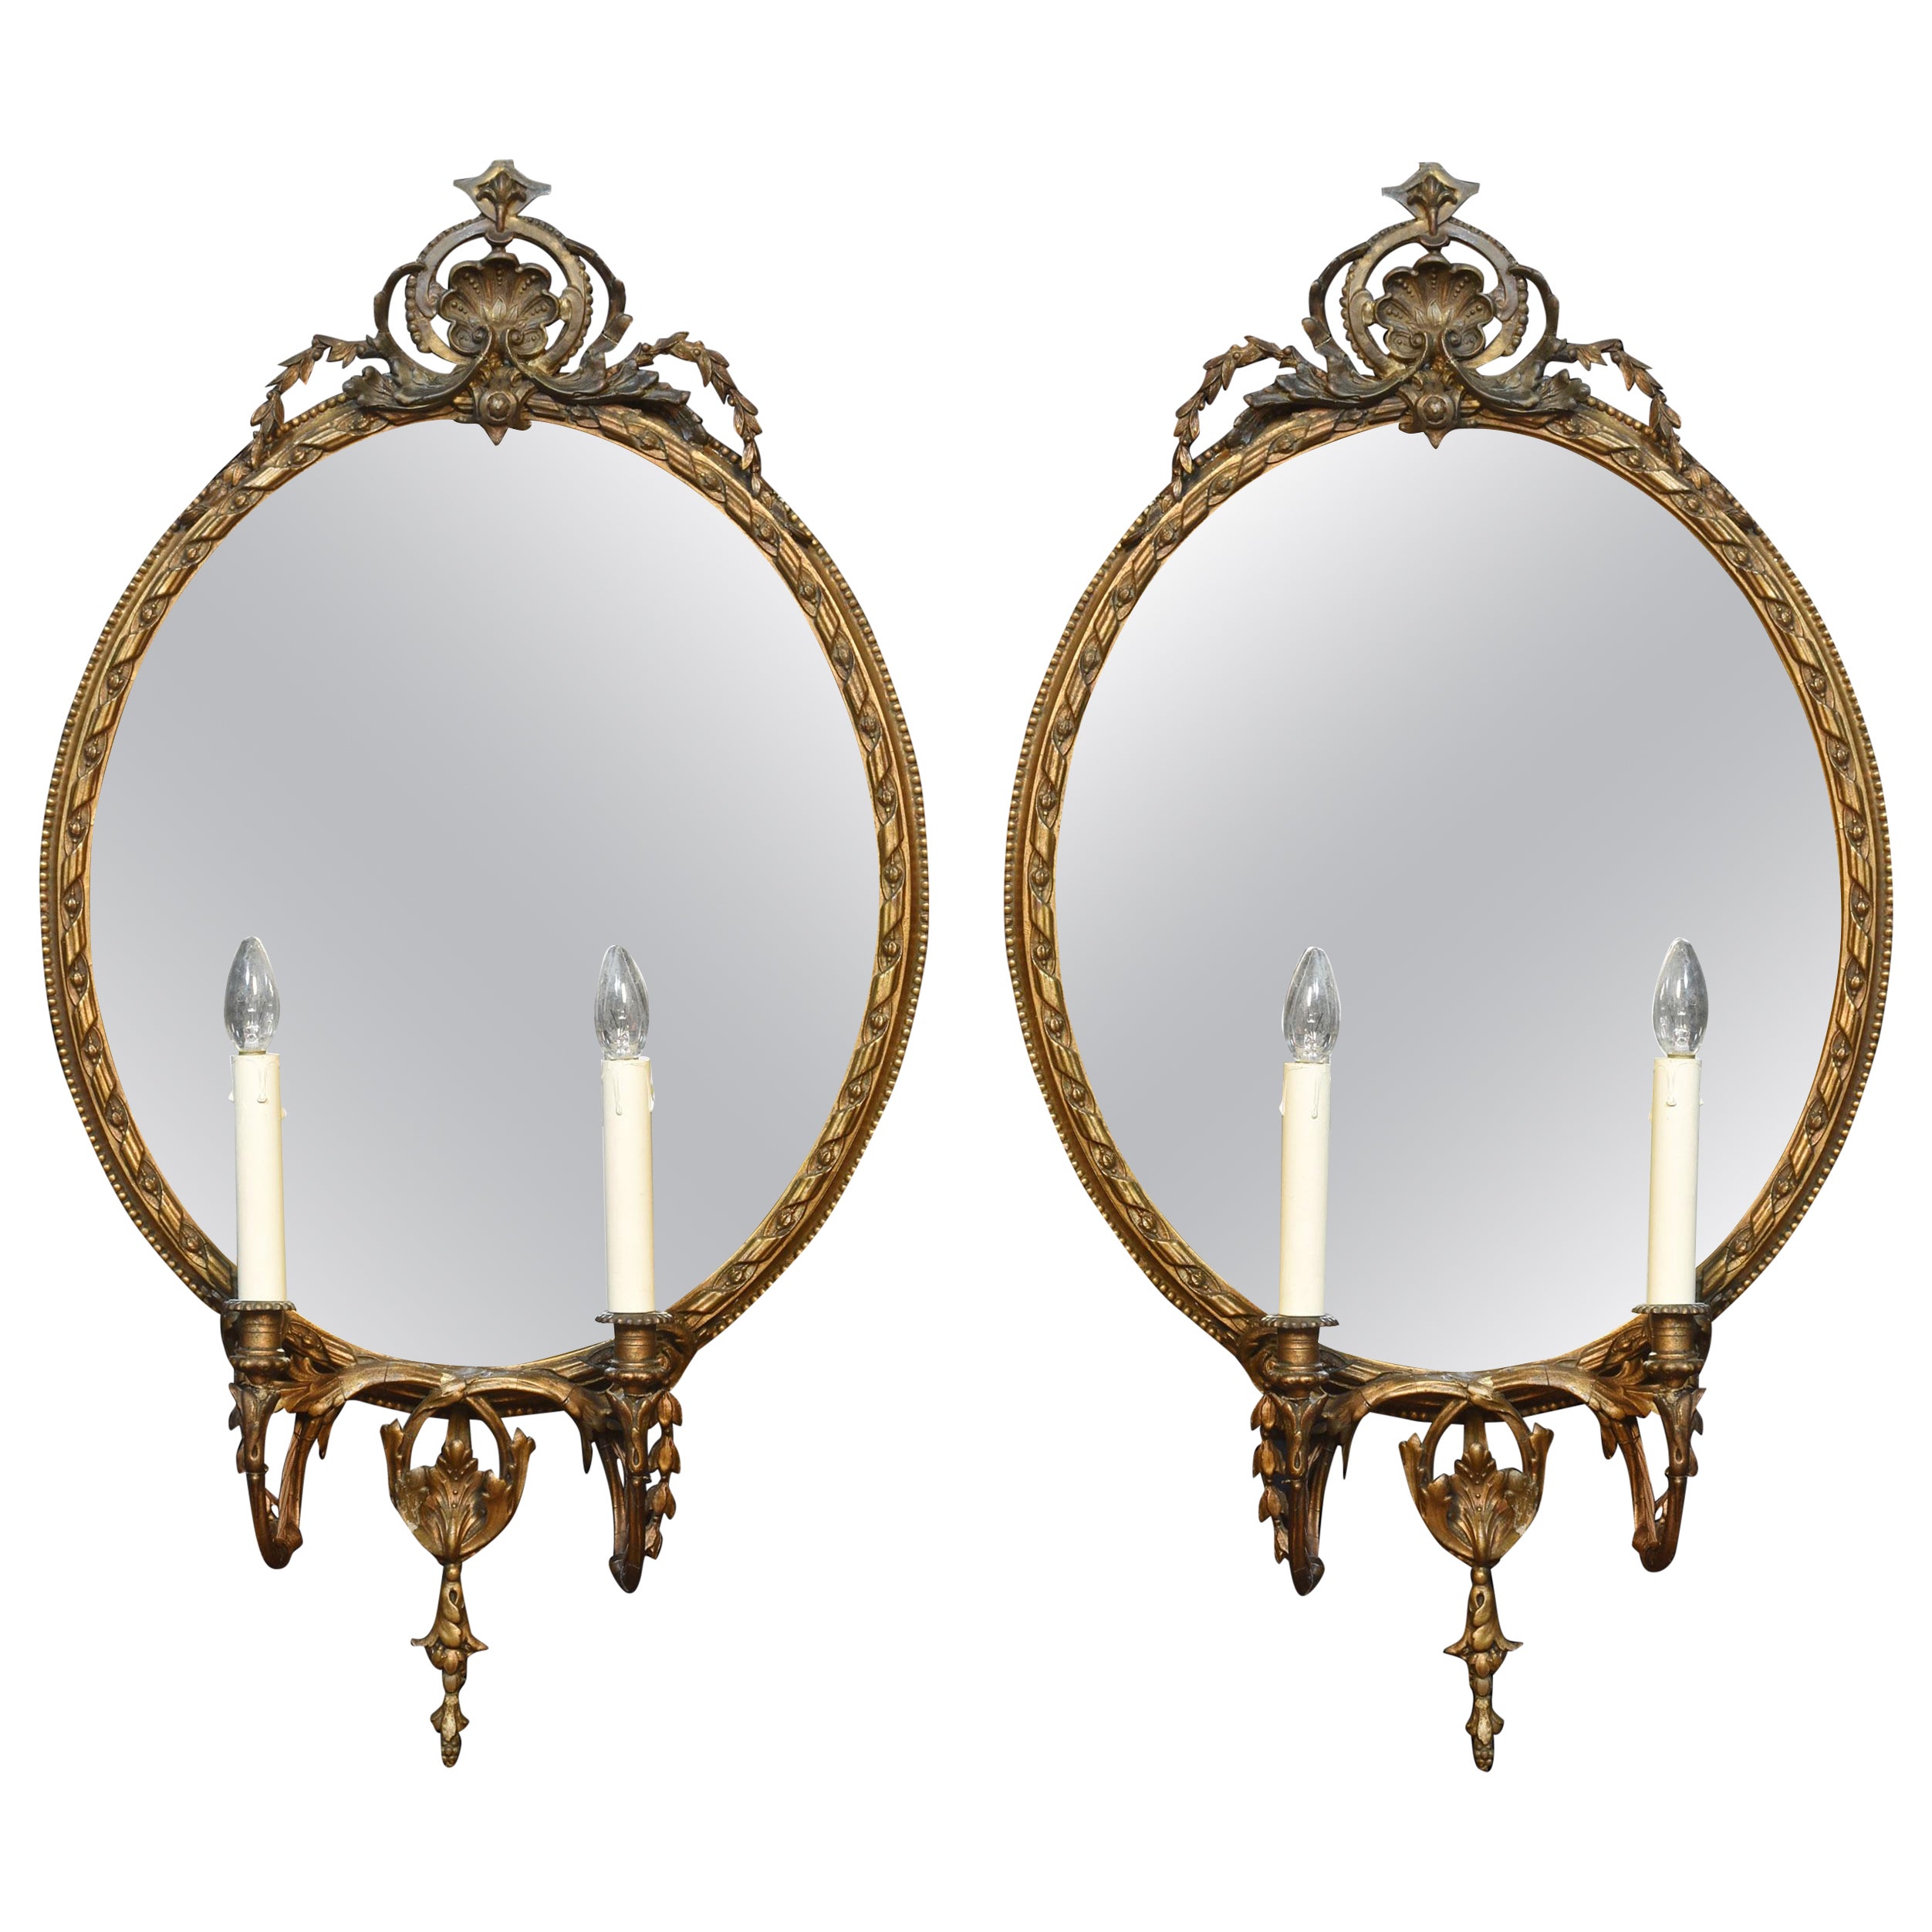 Pair of Gilt Girandole Wall Mirrors